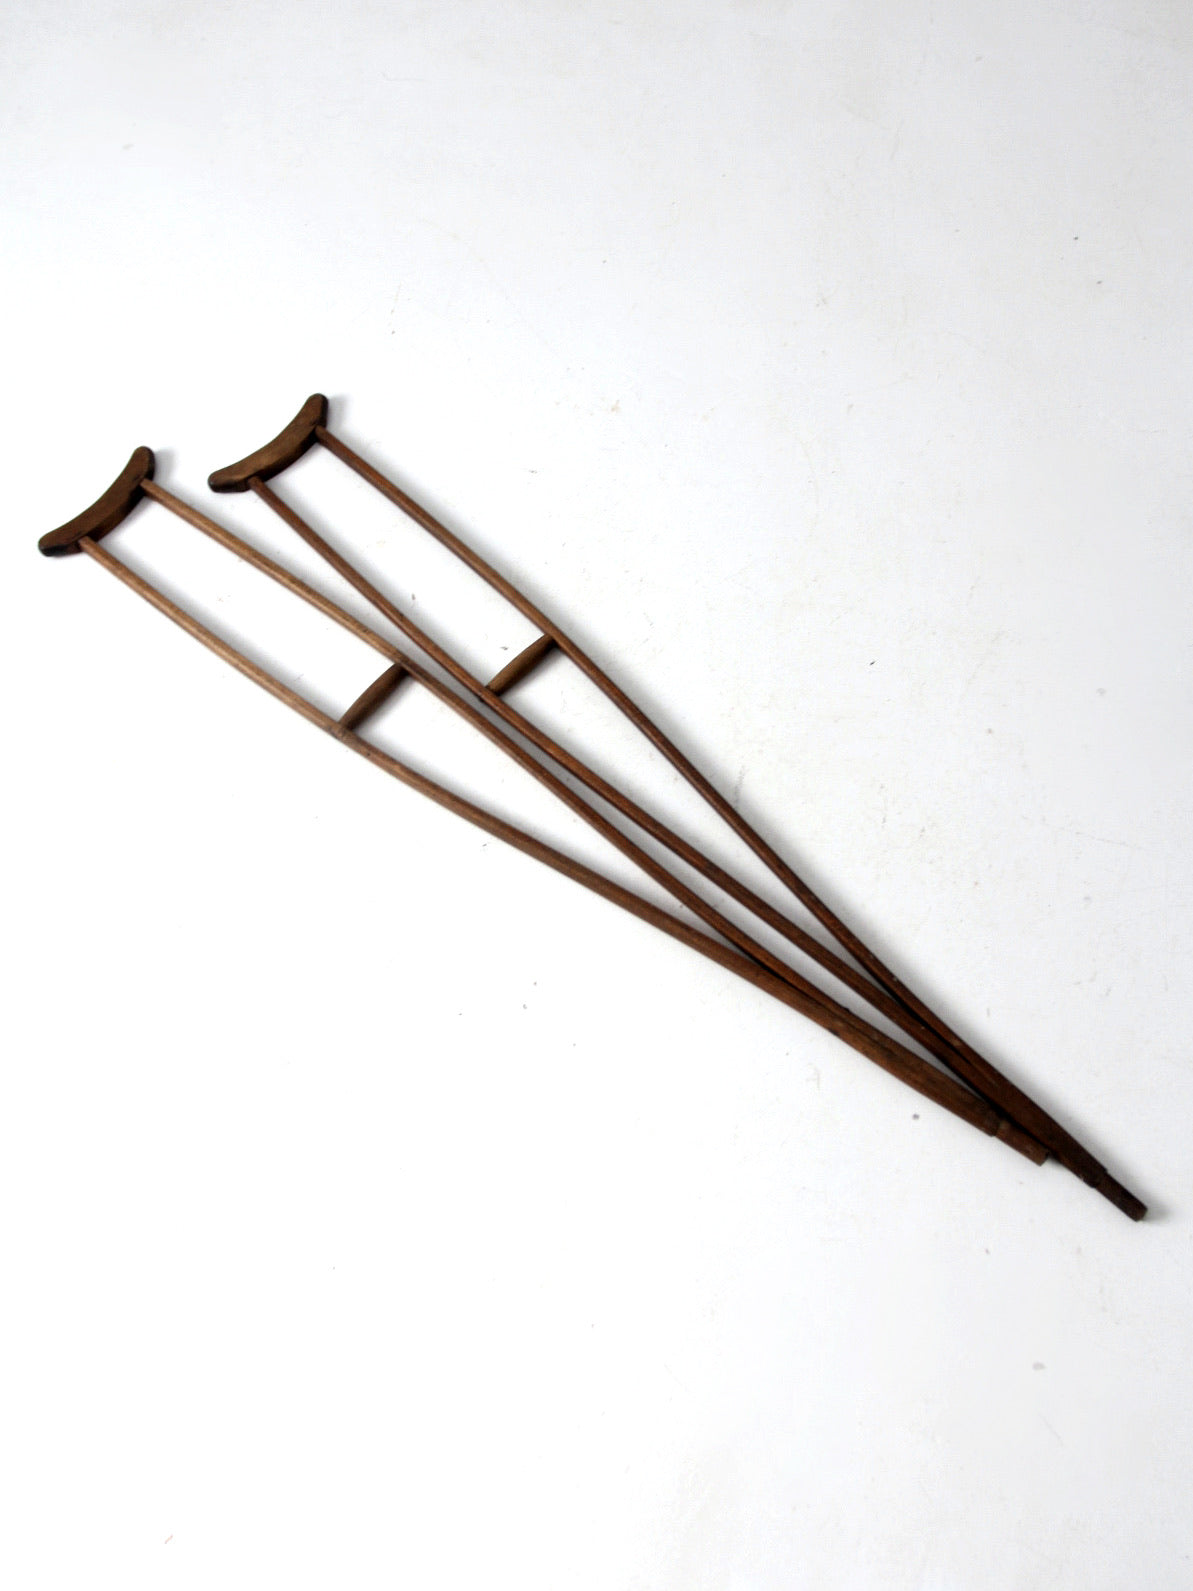 antique wood crutches